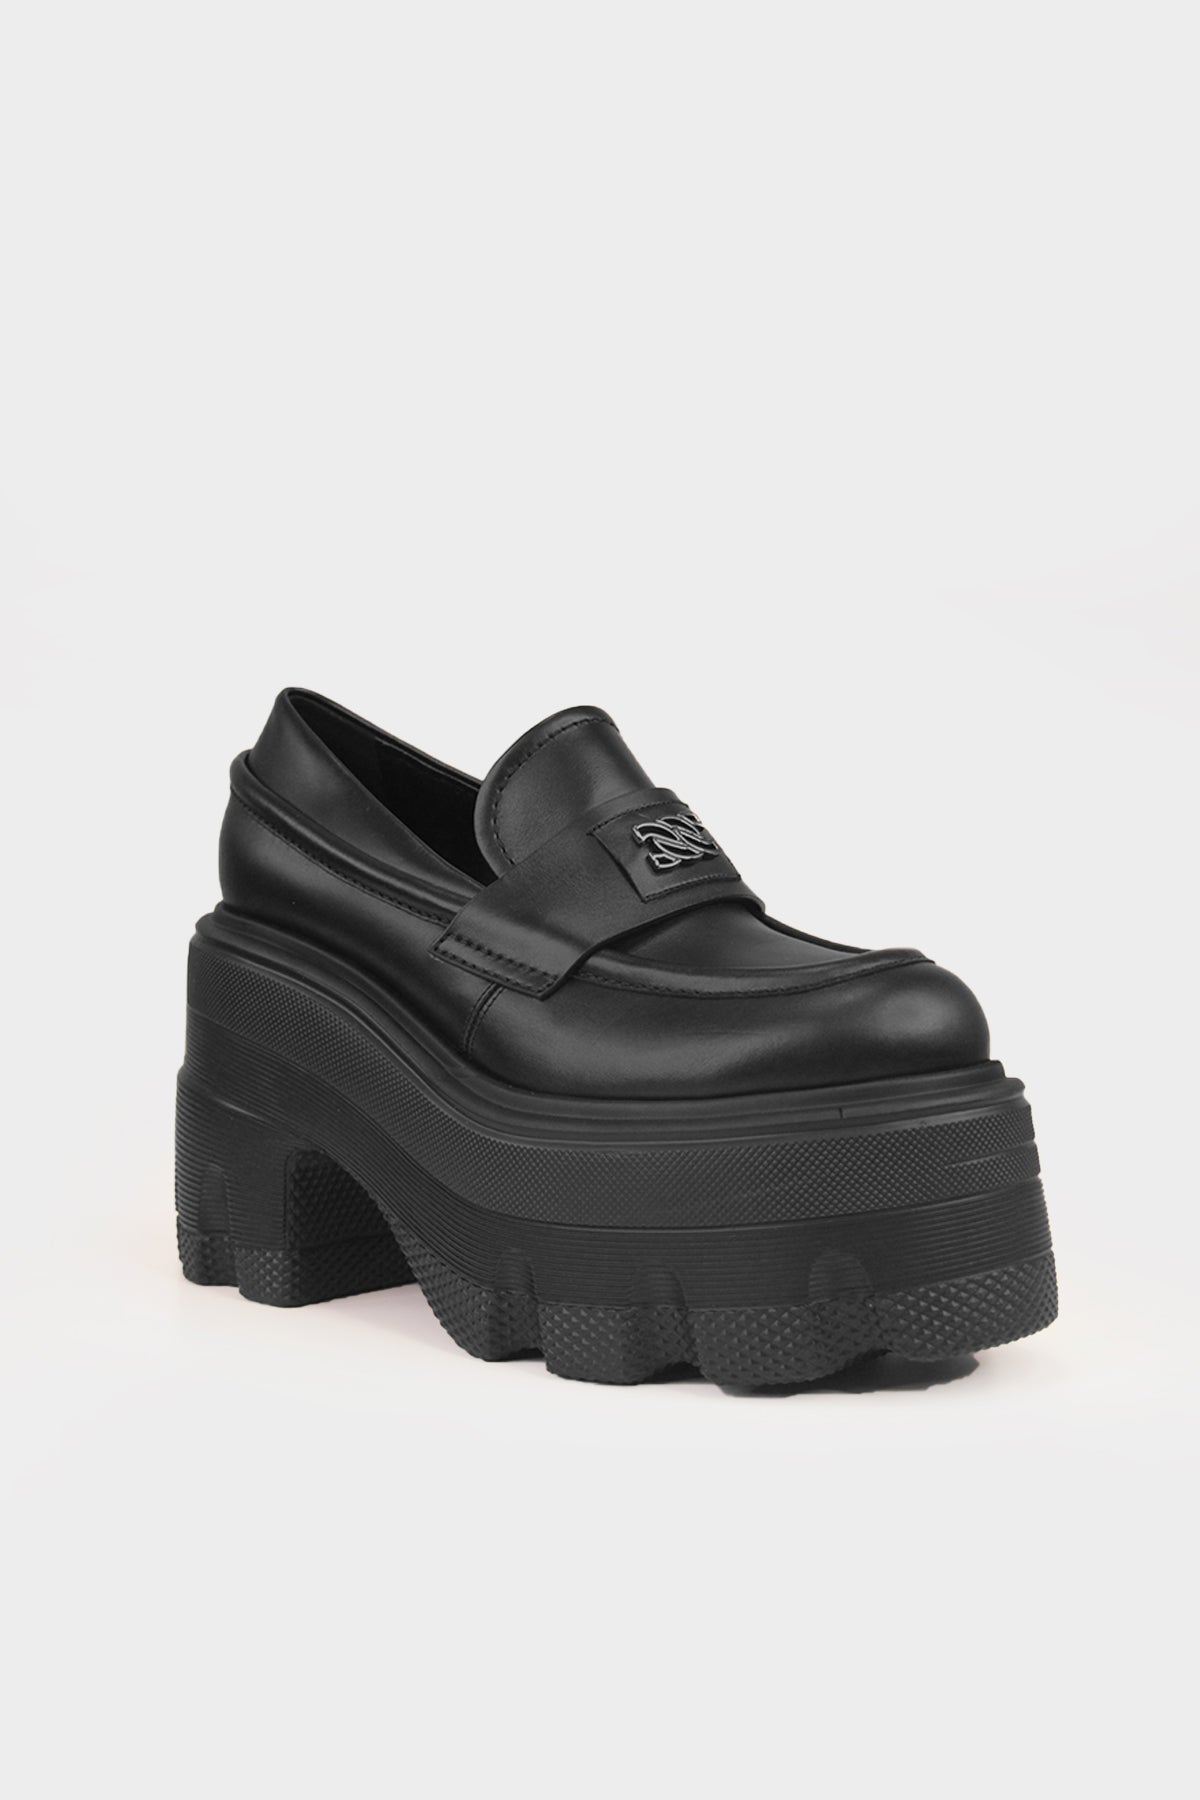 Lovecalf Loafers in Black - shop-olivia.com